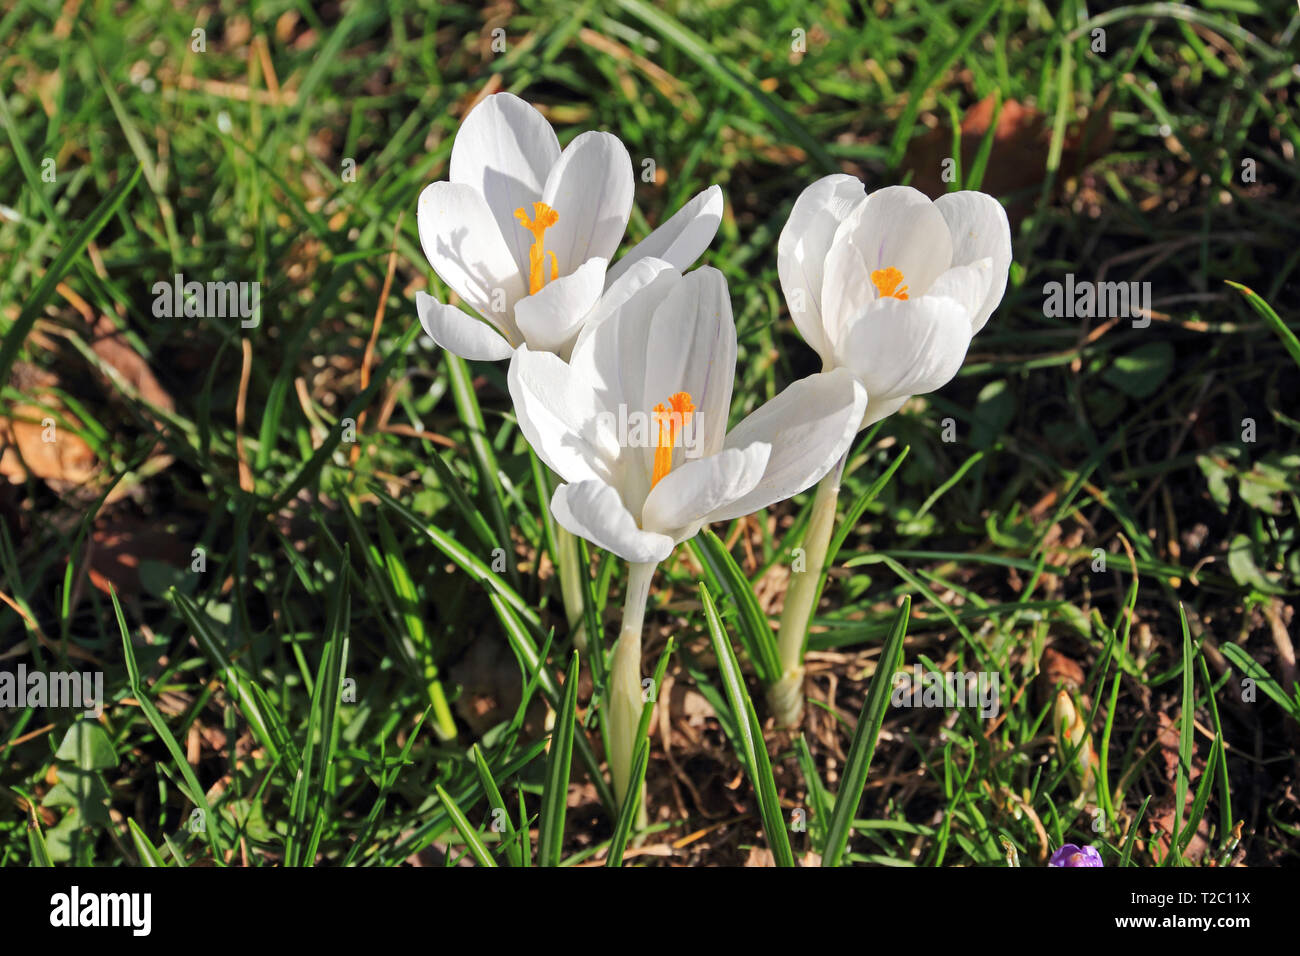 Group of three White crocus flowers Stock Photo